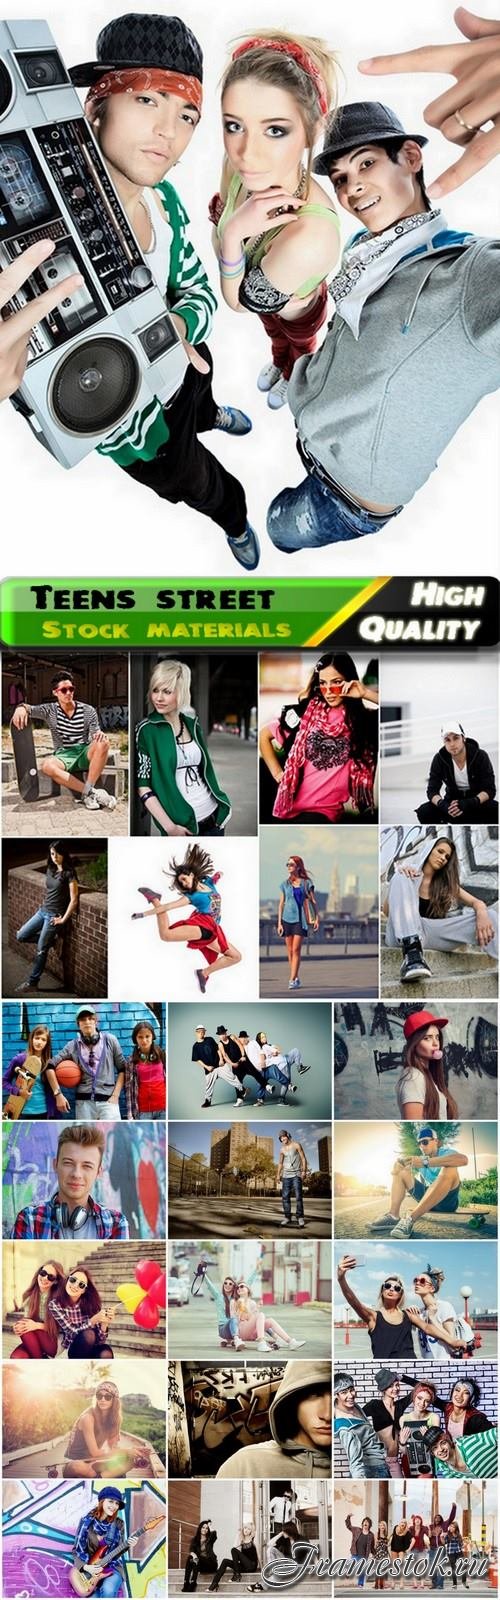 Teens street urban style - 25 HQ Jpg